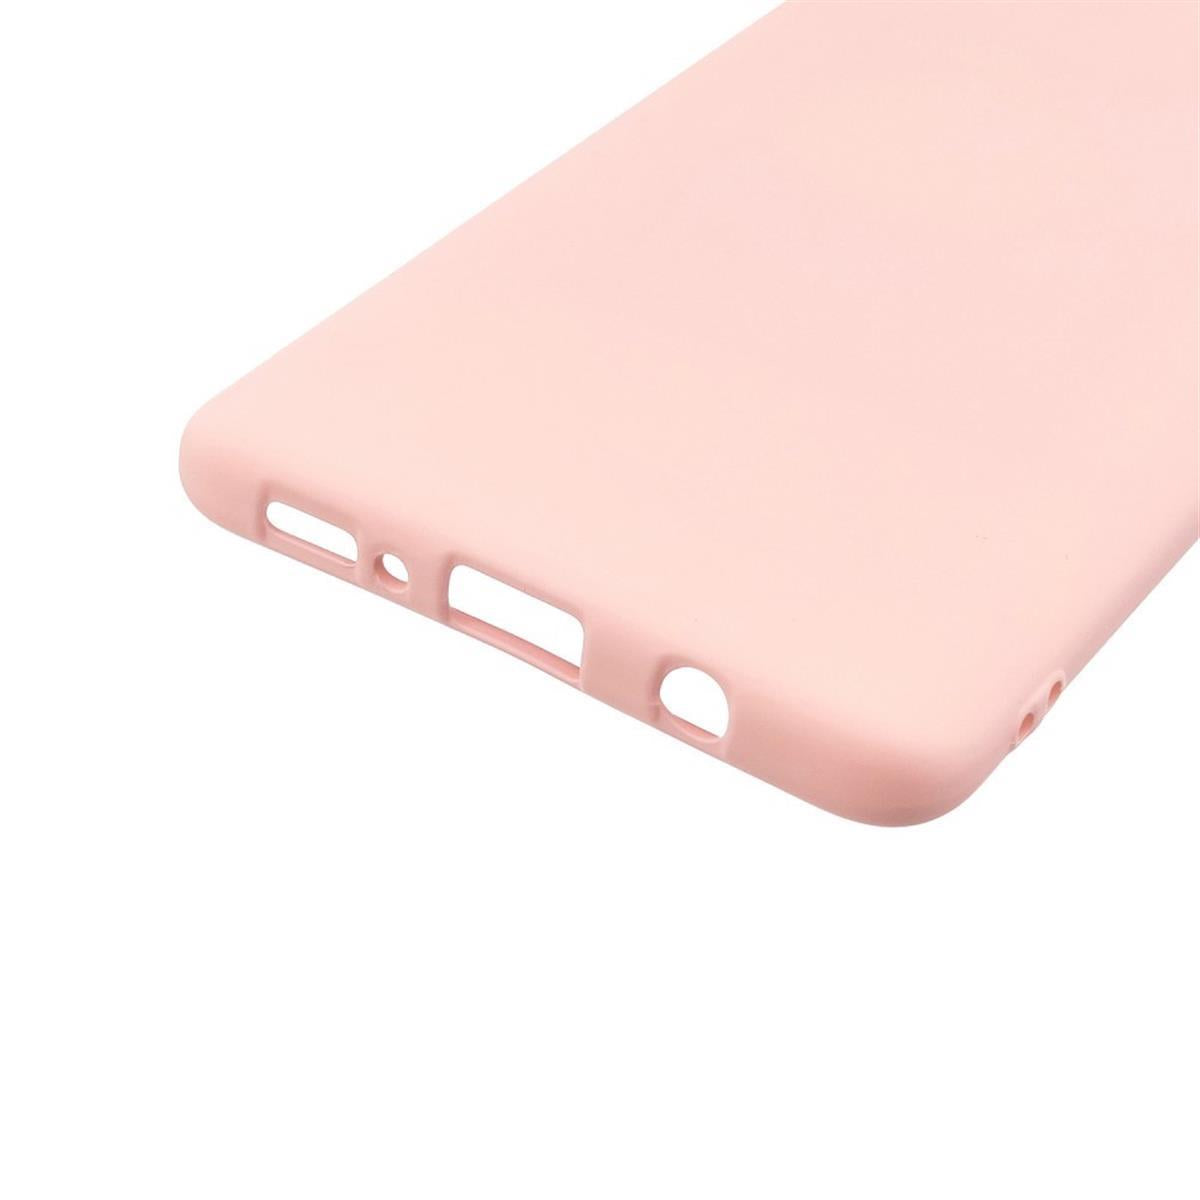 Hülle für Samsung Galaxy M31 Handyhülle Silikon Case Cover Schutzhülle Matt Rosa